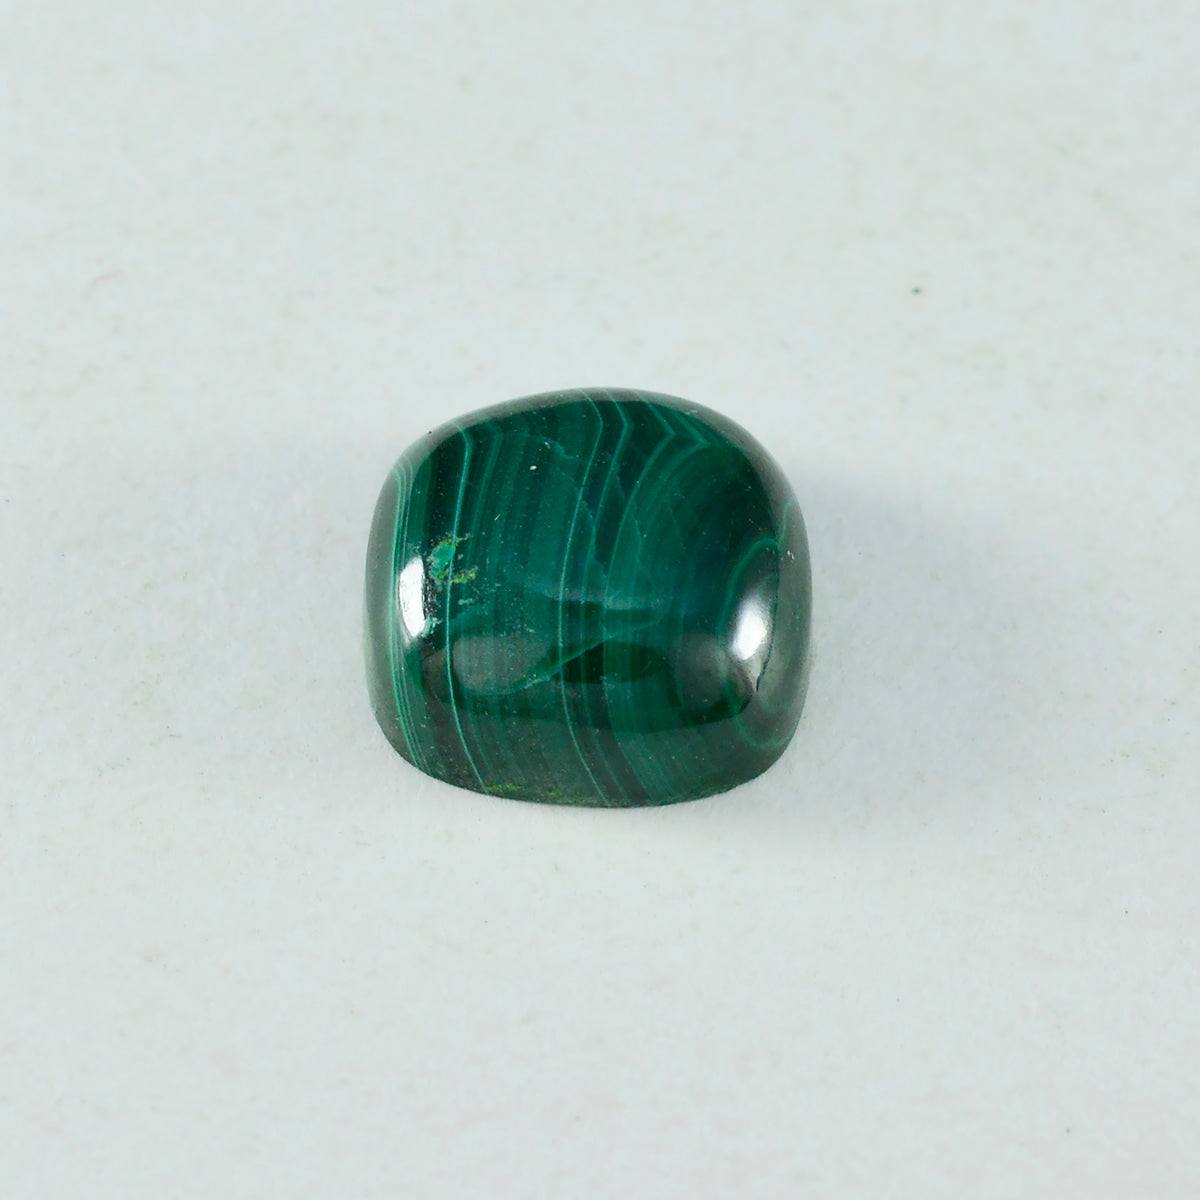 riyogems 1pc グリーン マラカイト カボション 15x15 mm クッション形状 aaa 品質宝石